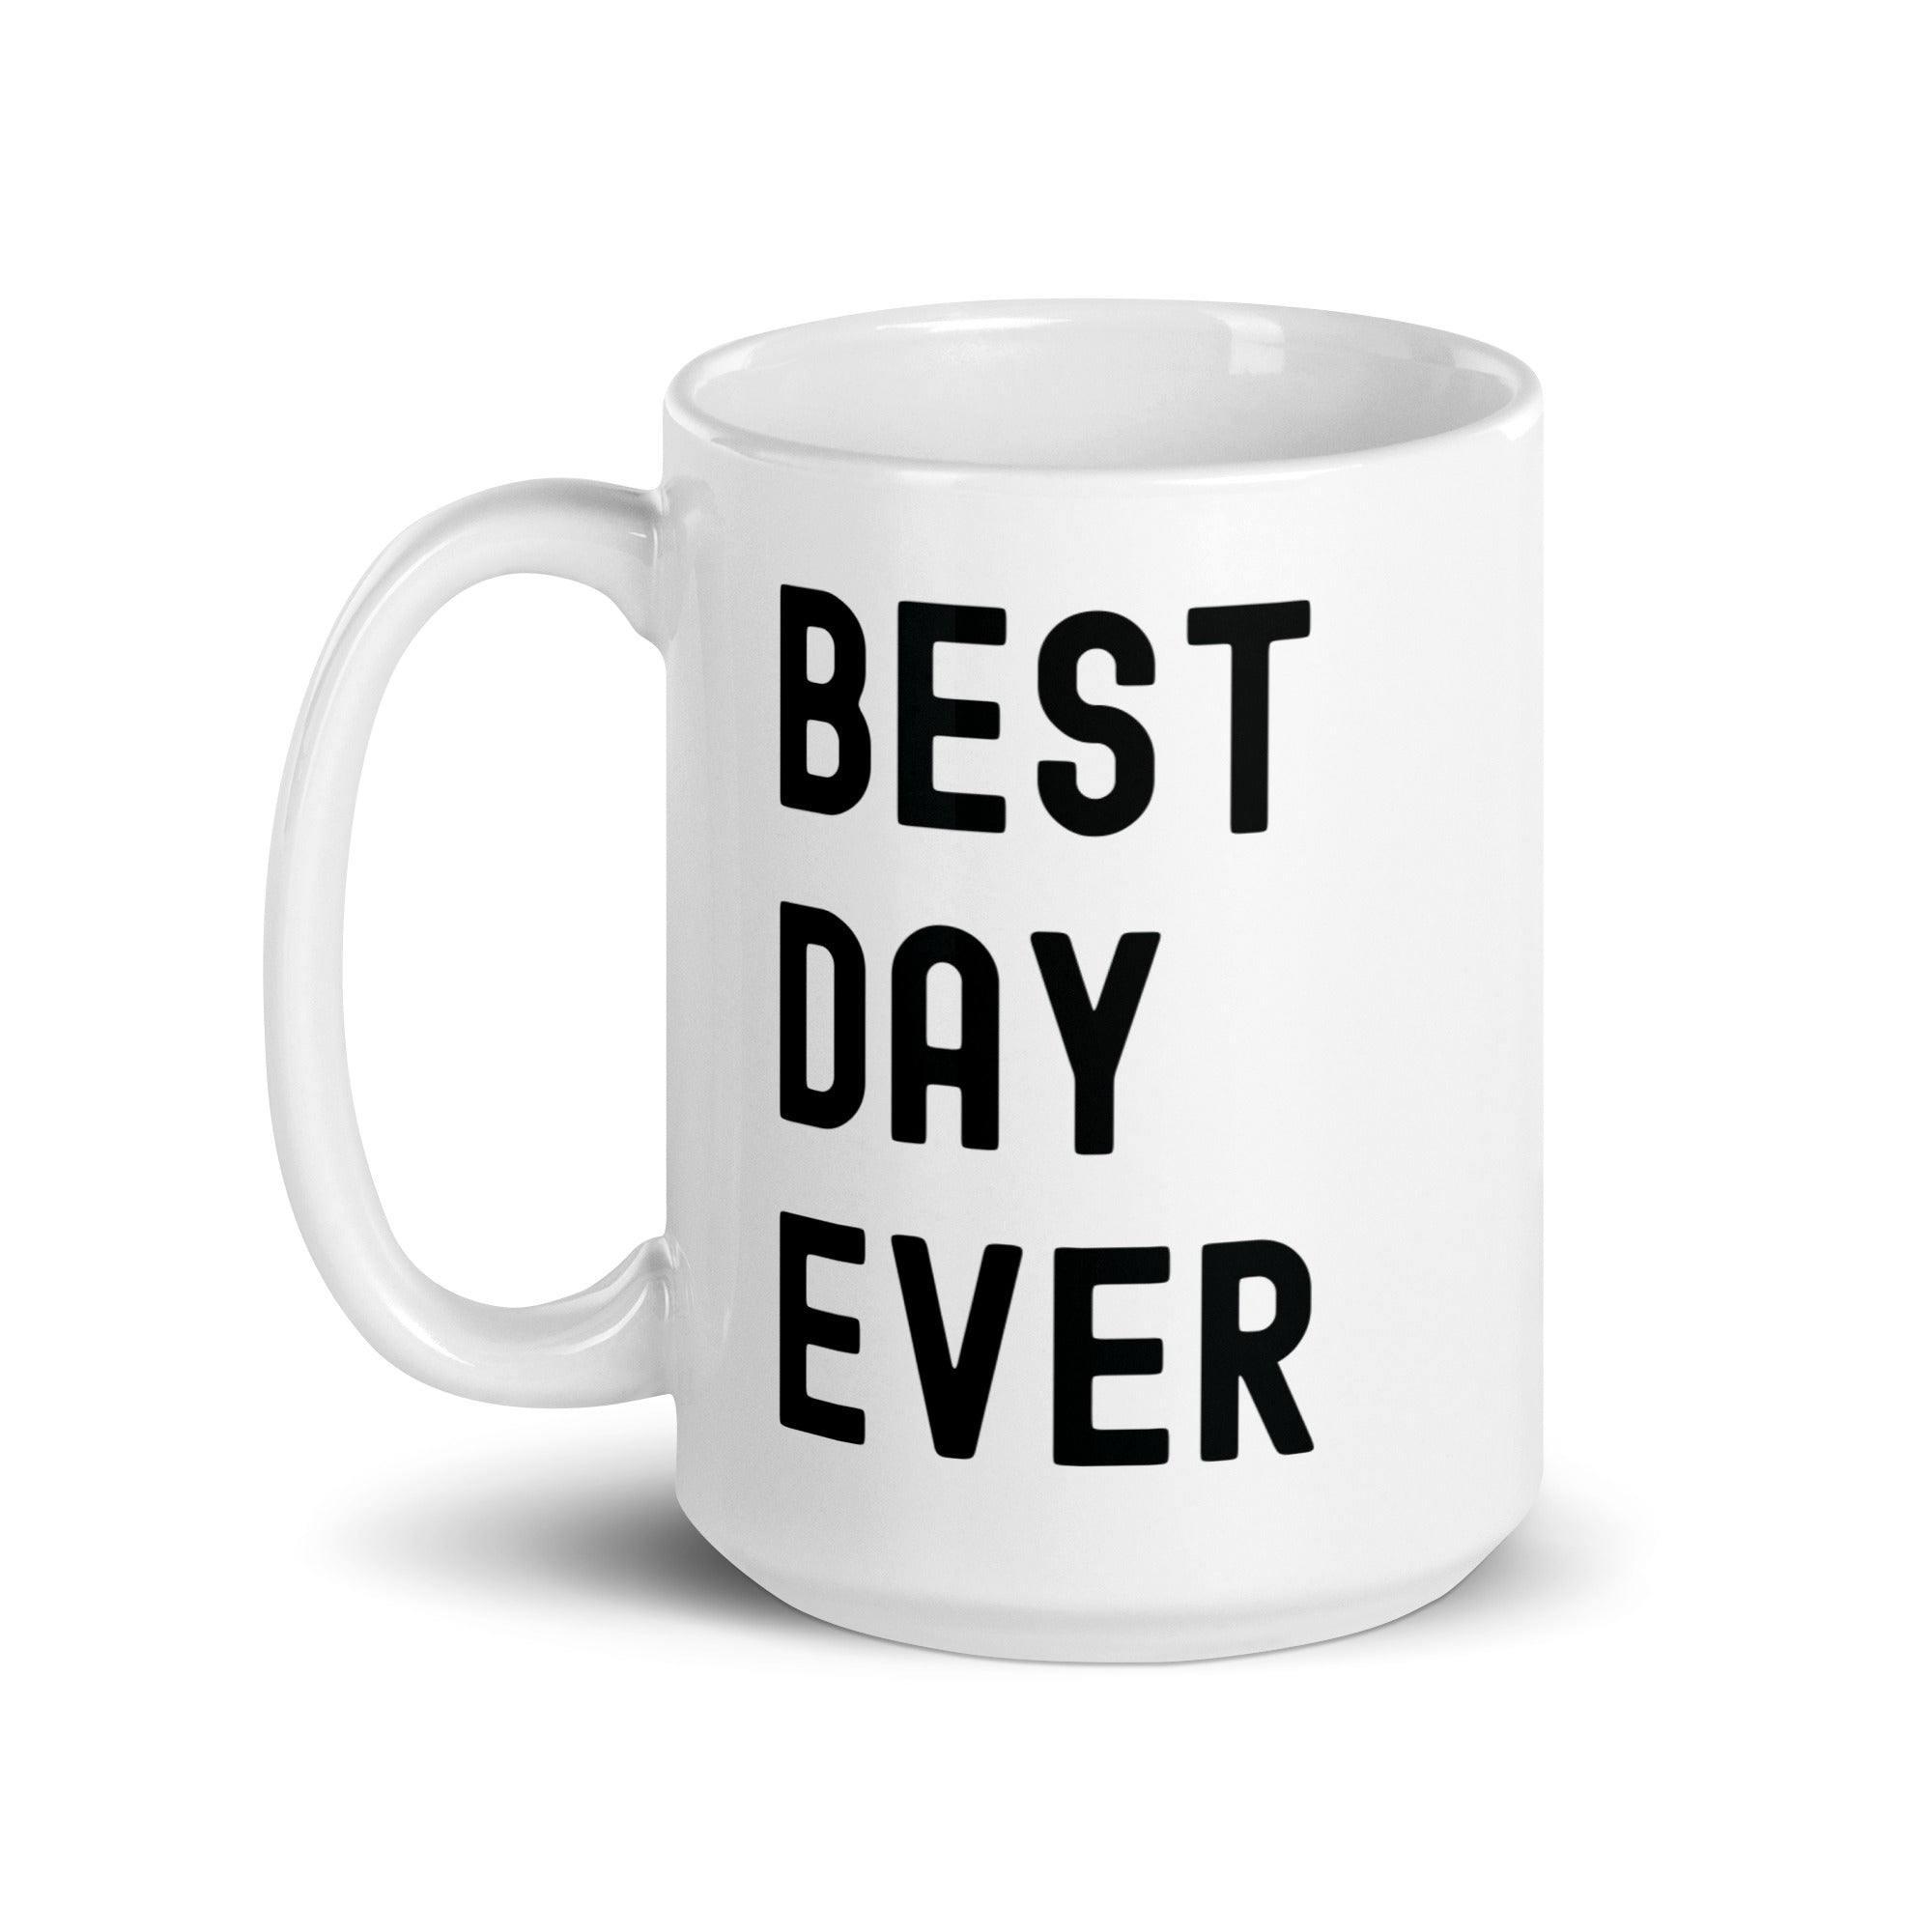 White glossy mug | The best day ever